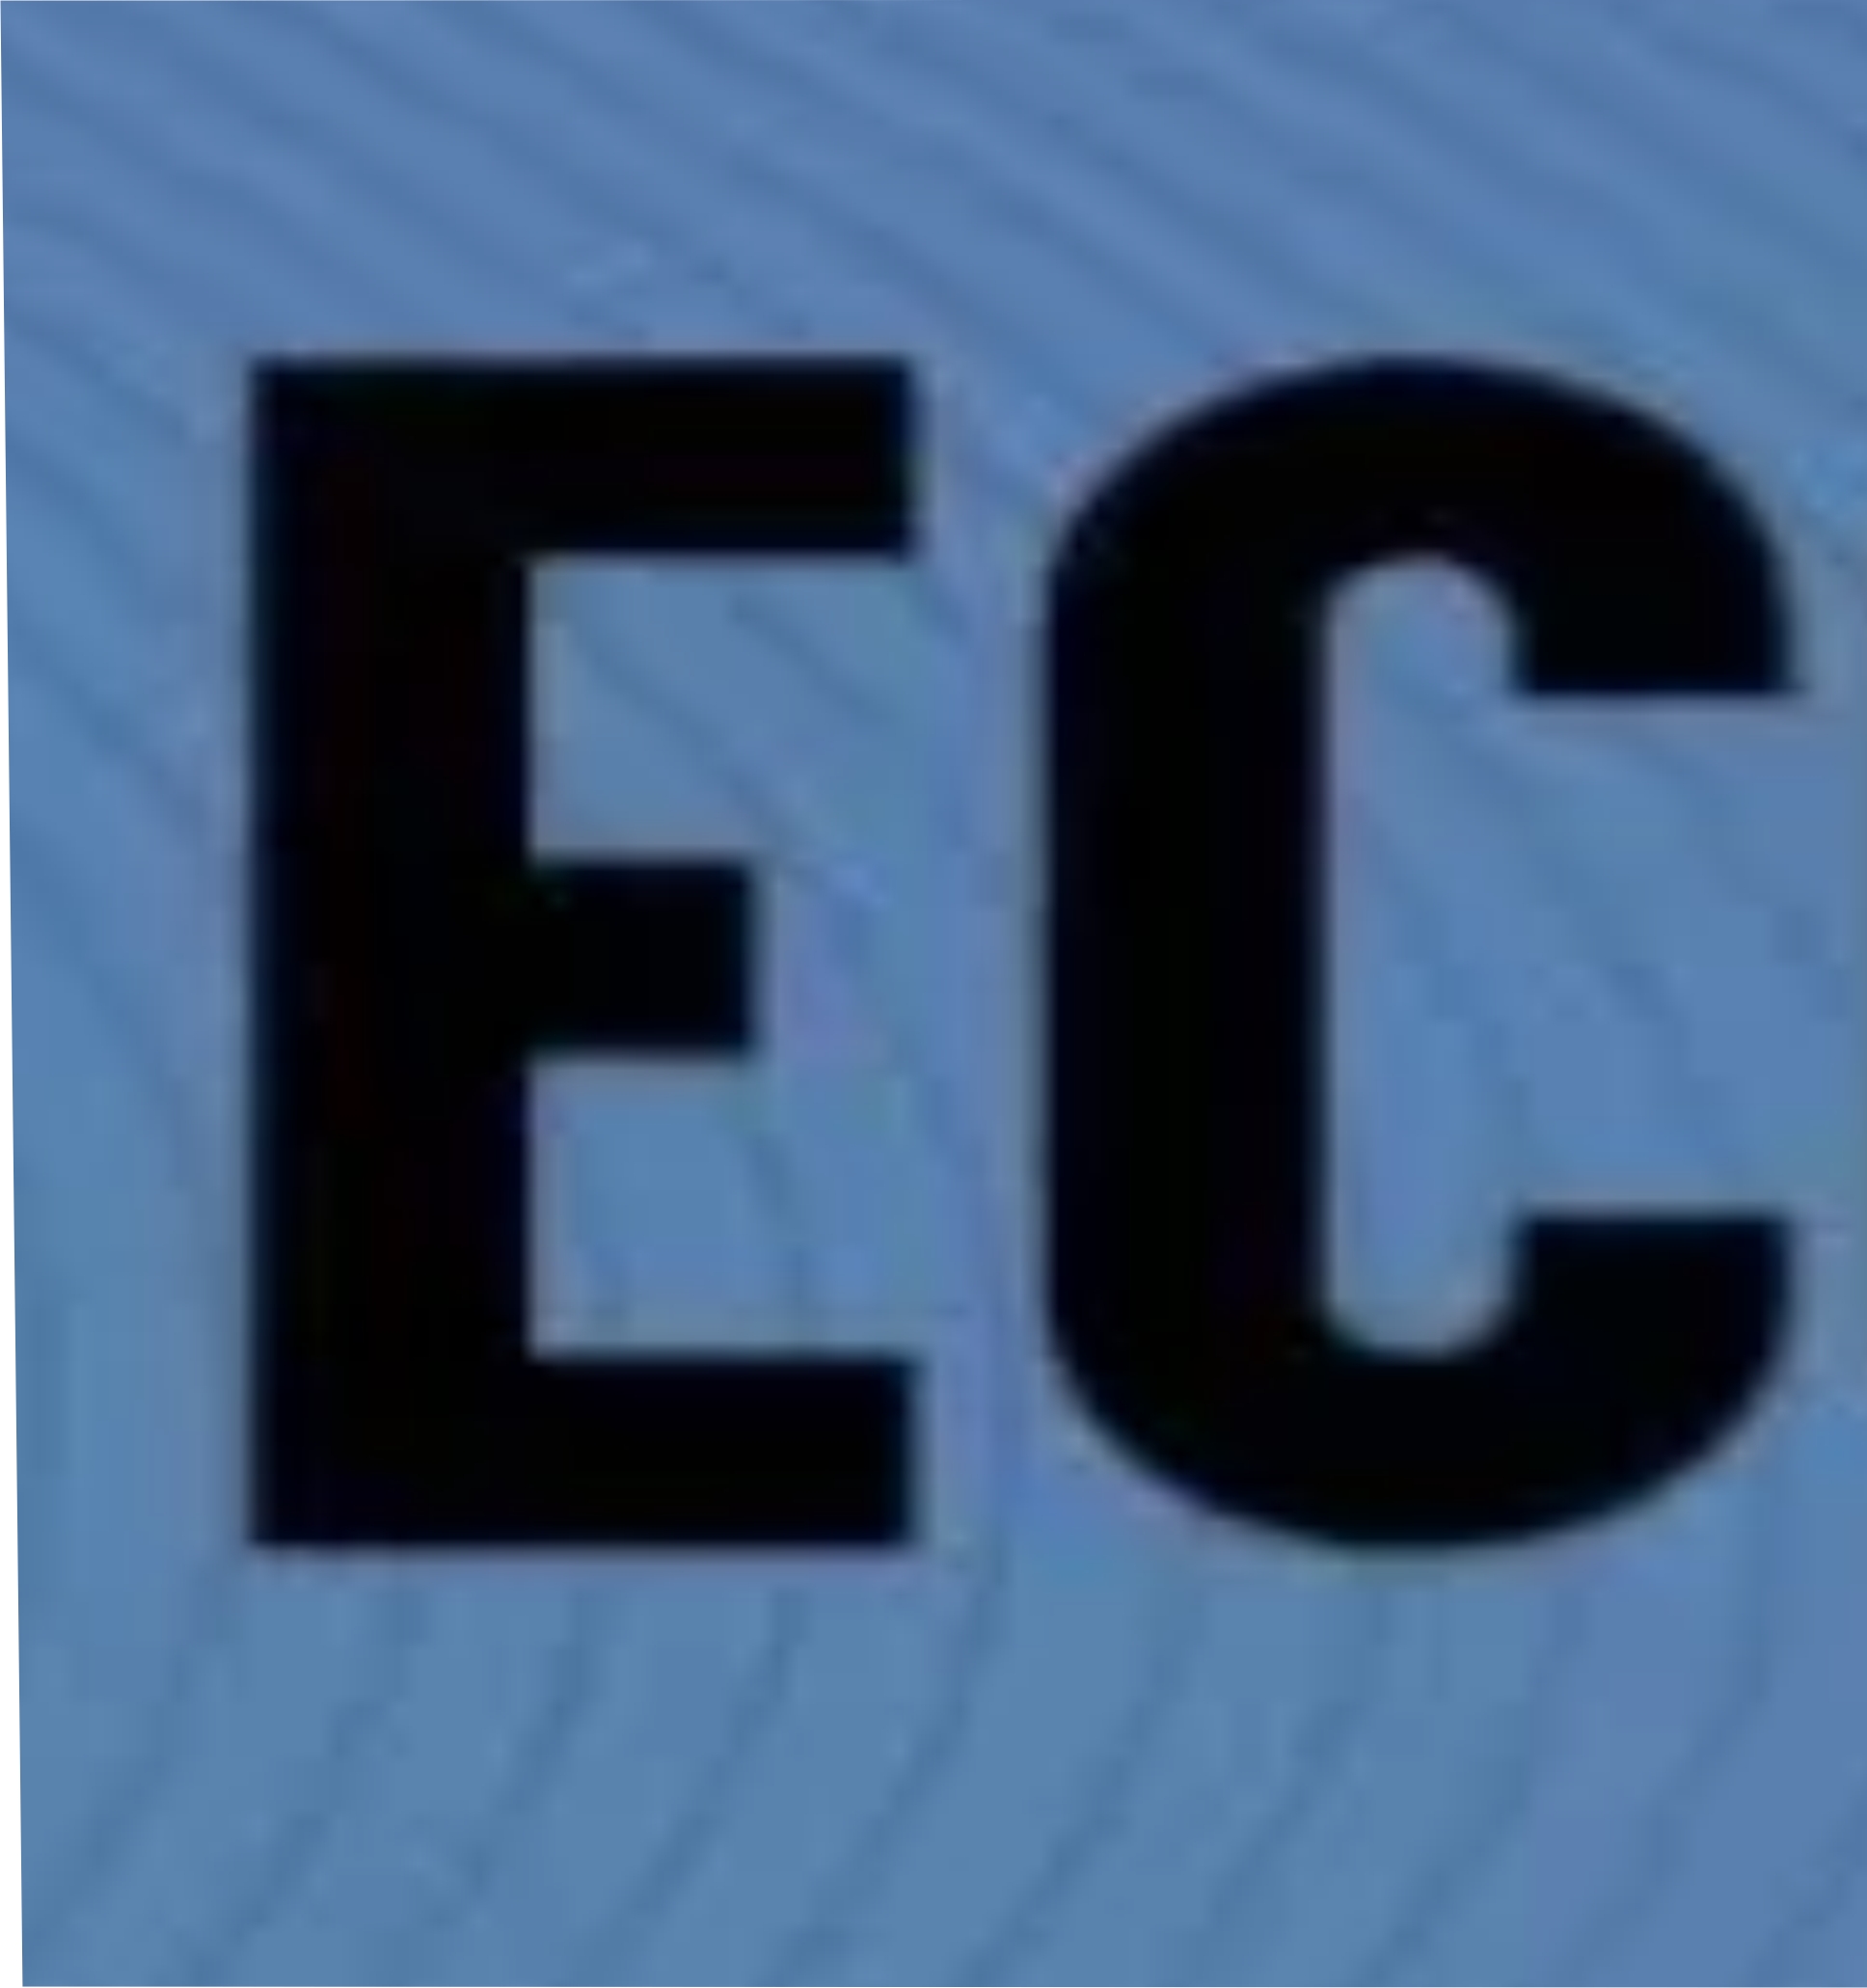 ECO Symbol